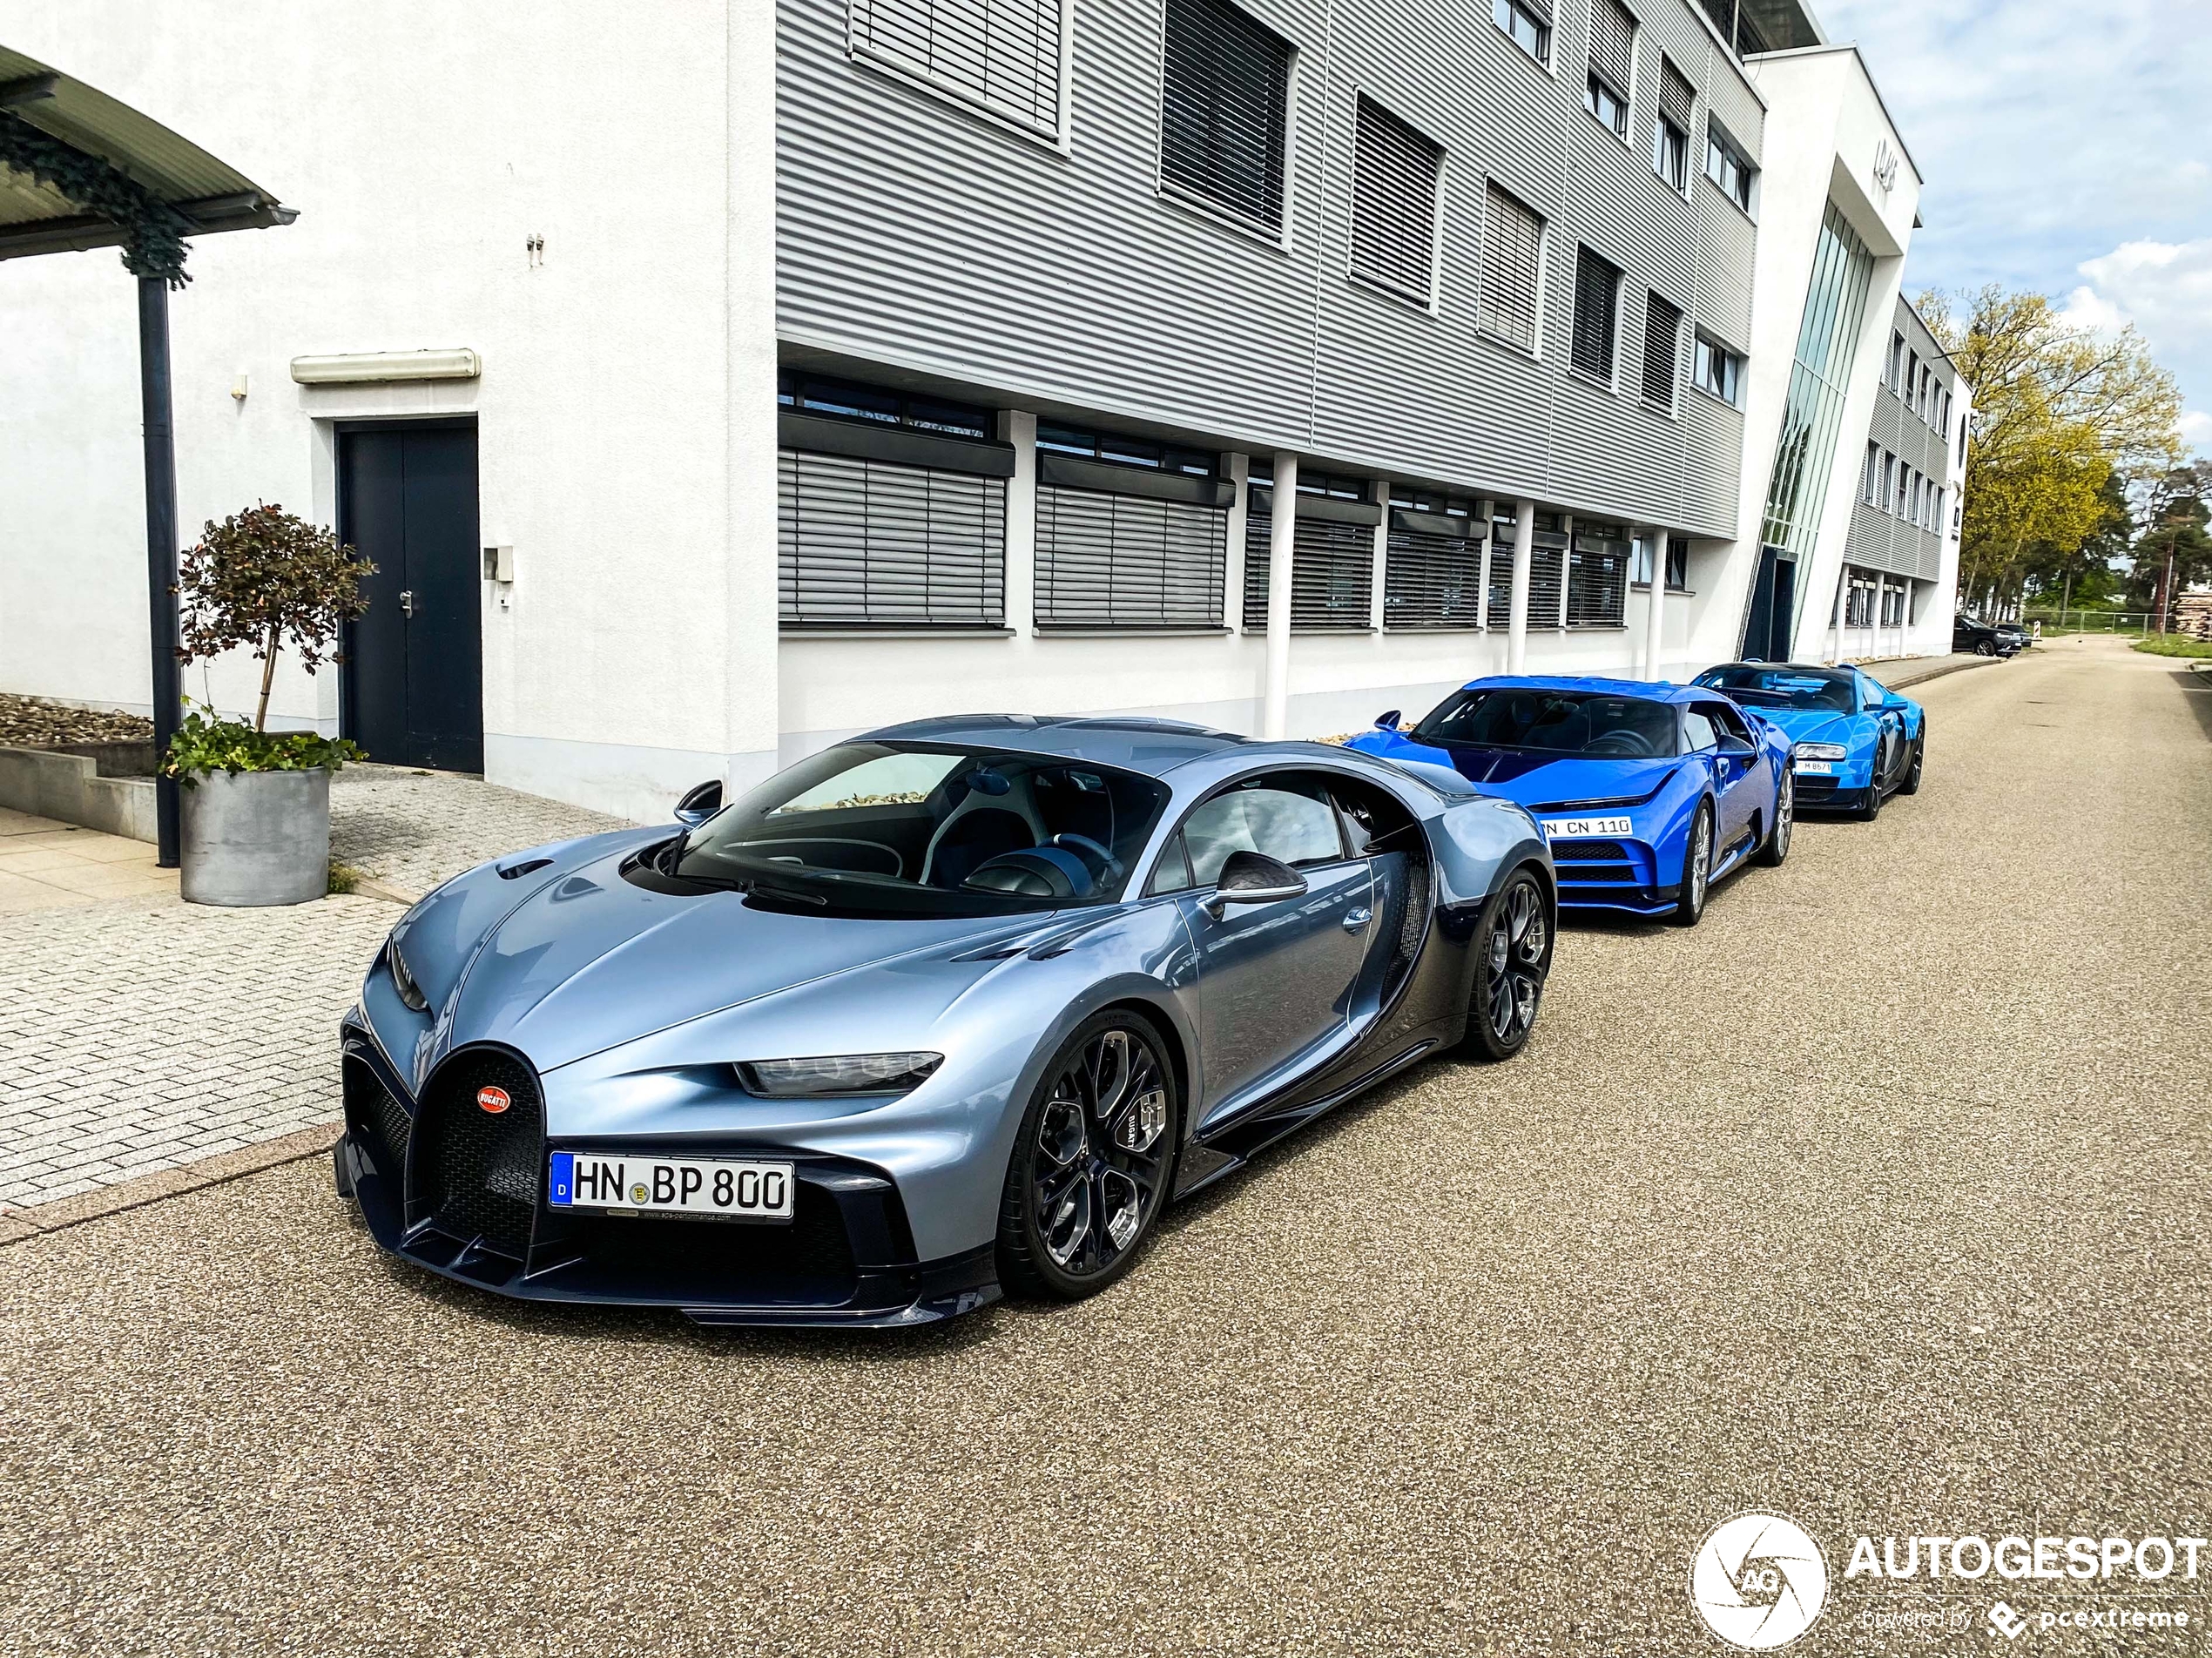 Wow! Bugatti Chiron Profilée shows up in insane combo